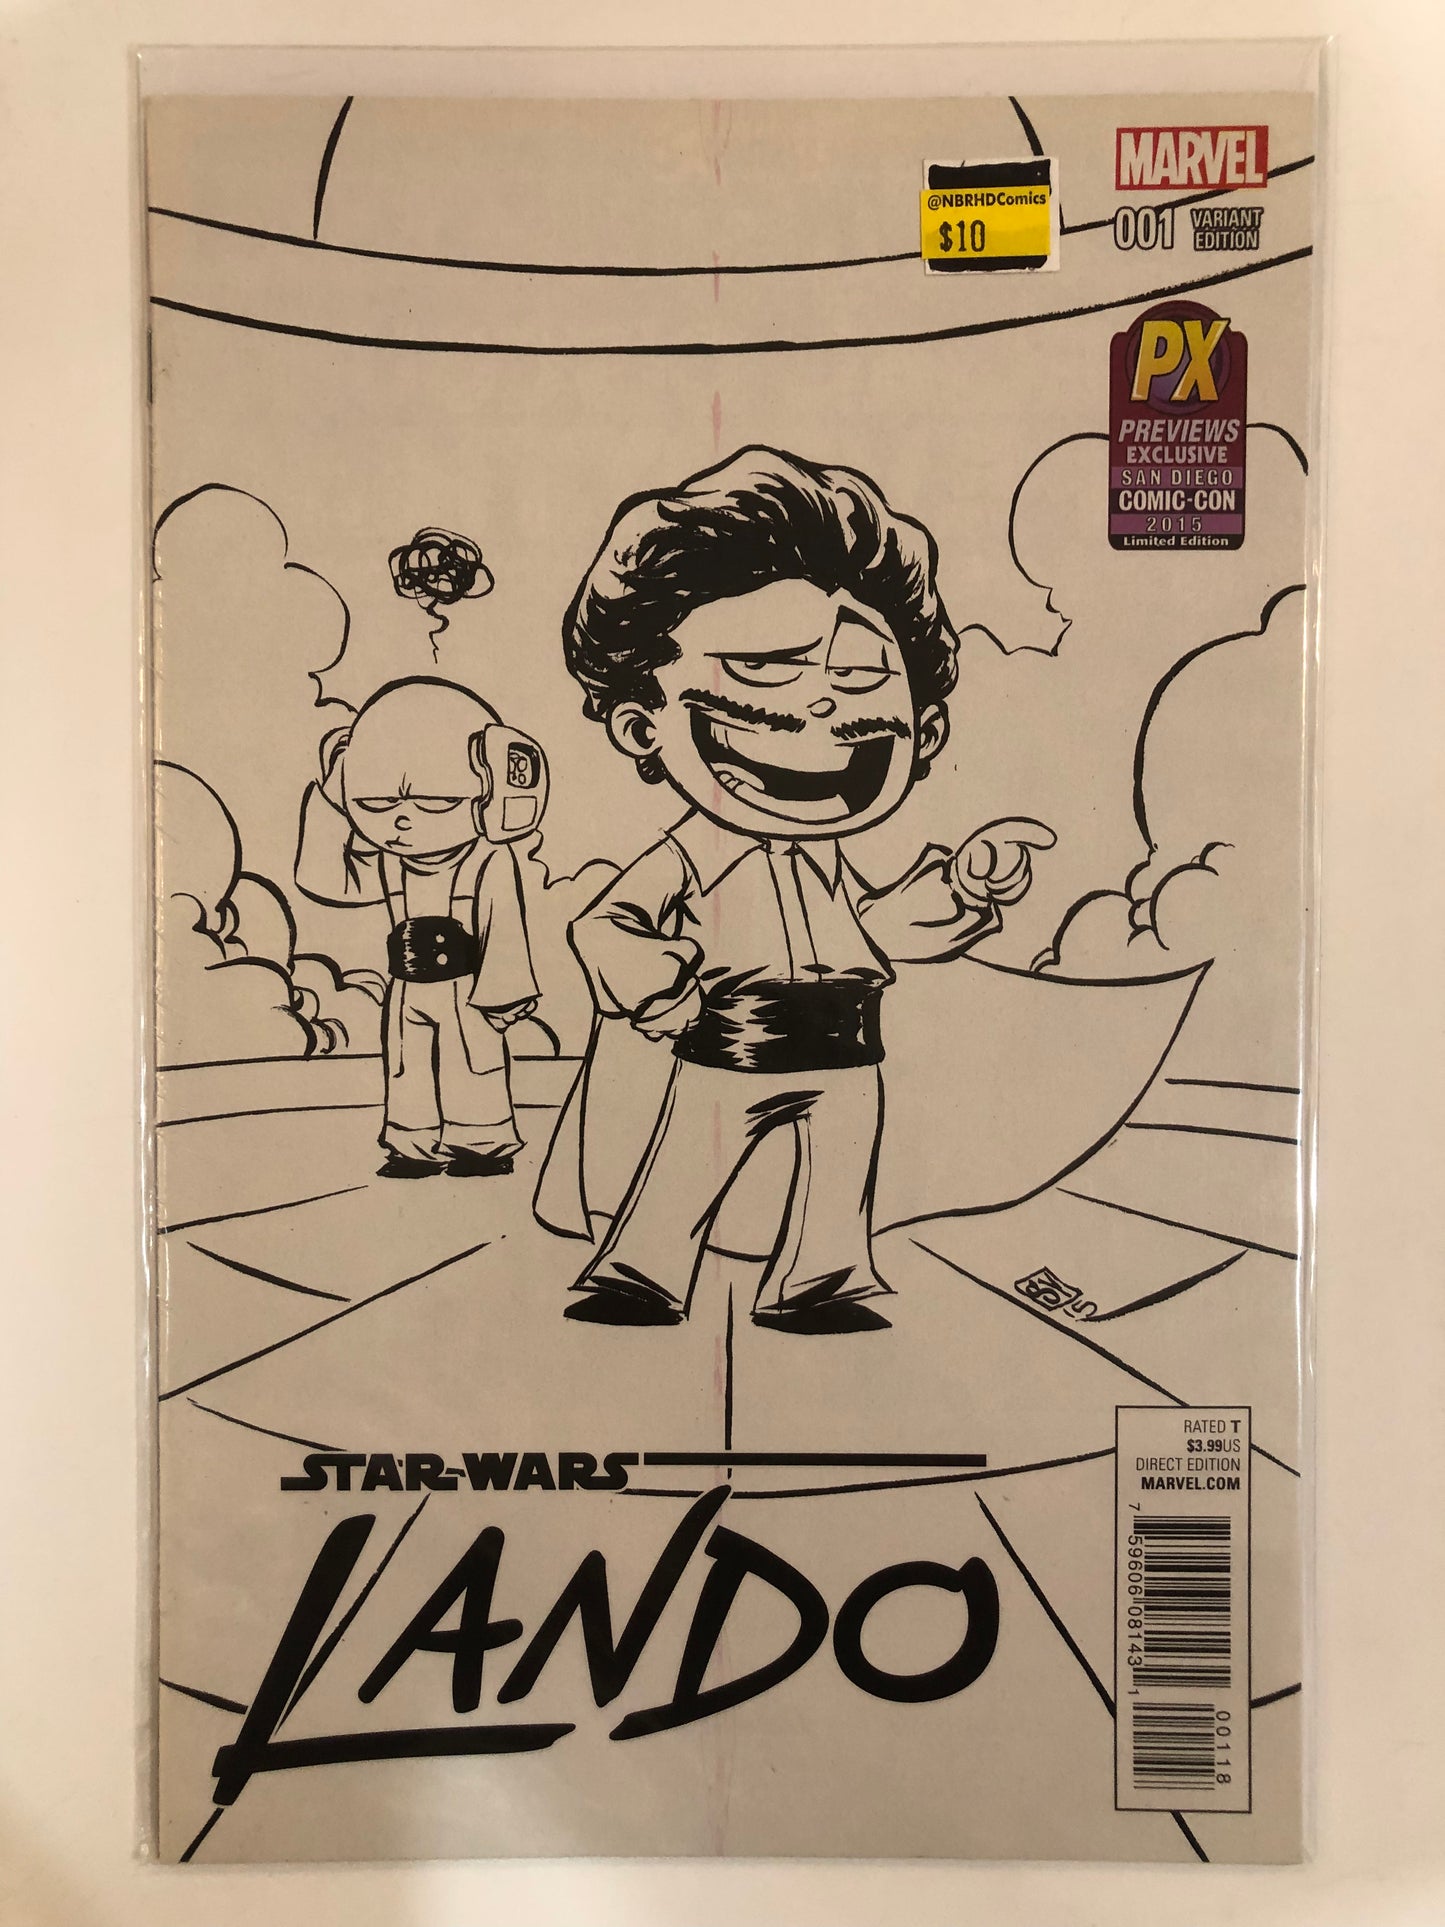 Star Wars: Lando #1 Previews Exclusive SDCC Variant